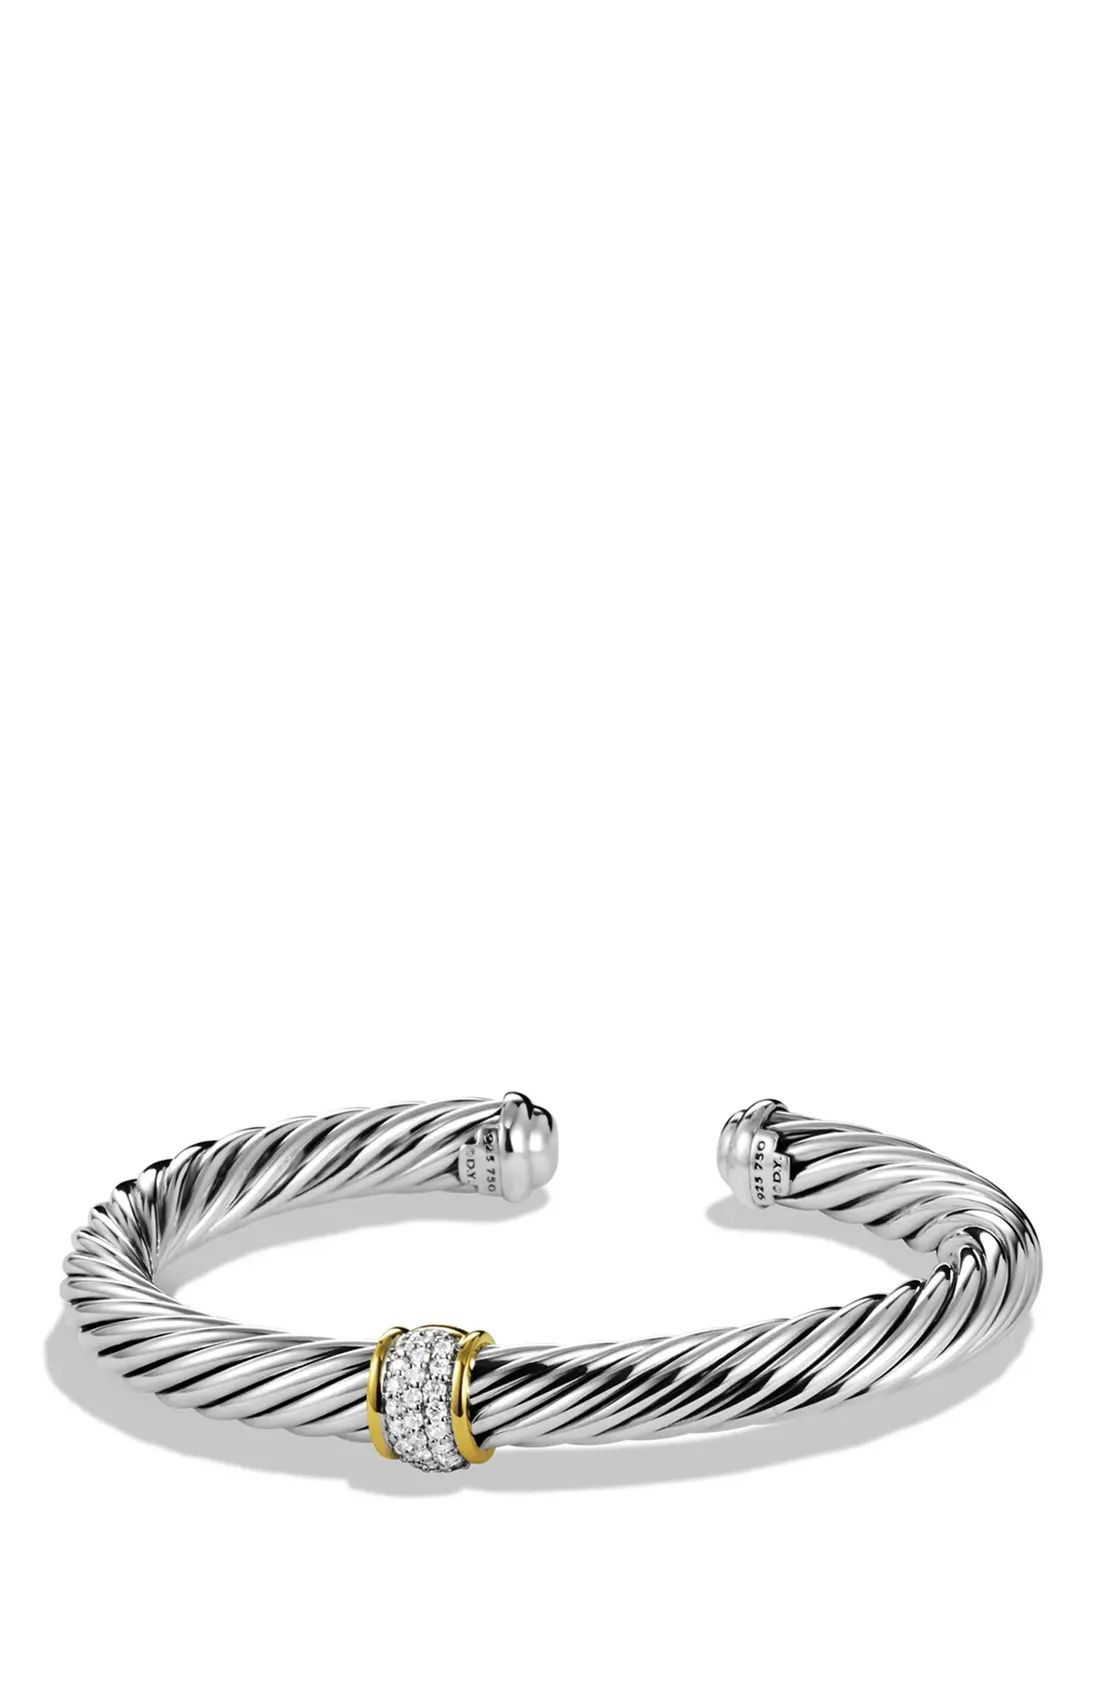 David Yurman Cable Classics Bracelet with Diamonds & 18K Gold, 7mm | Nordstrom